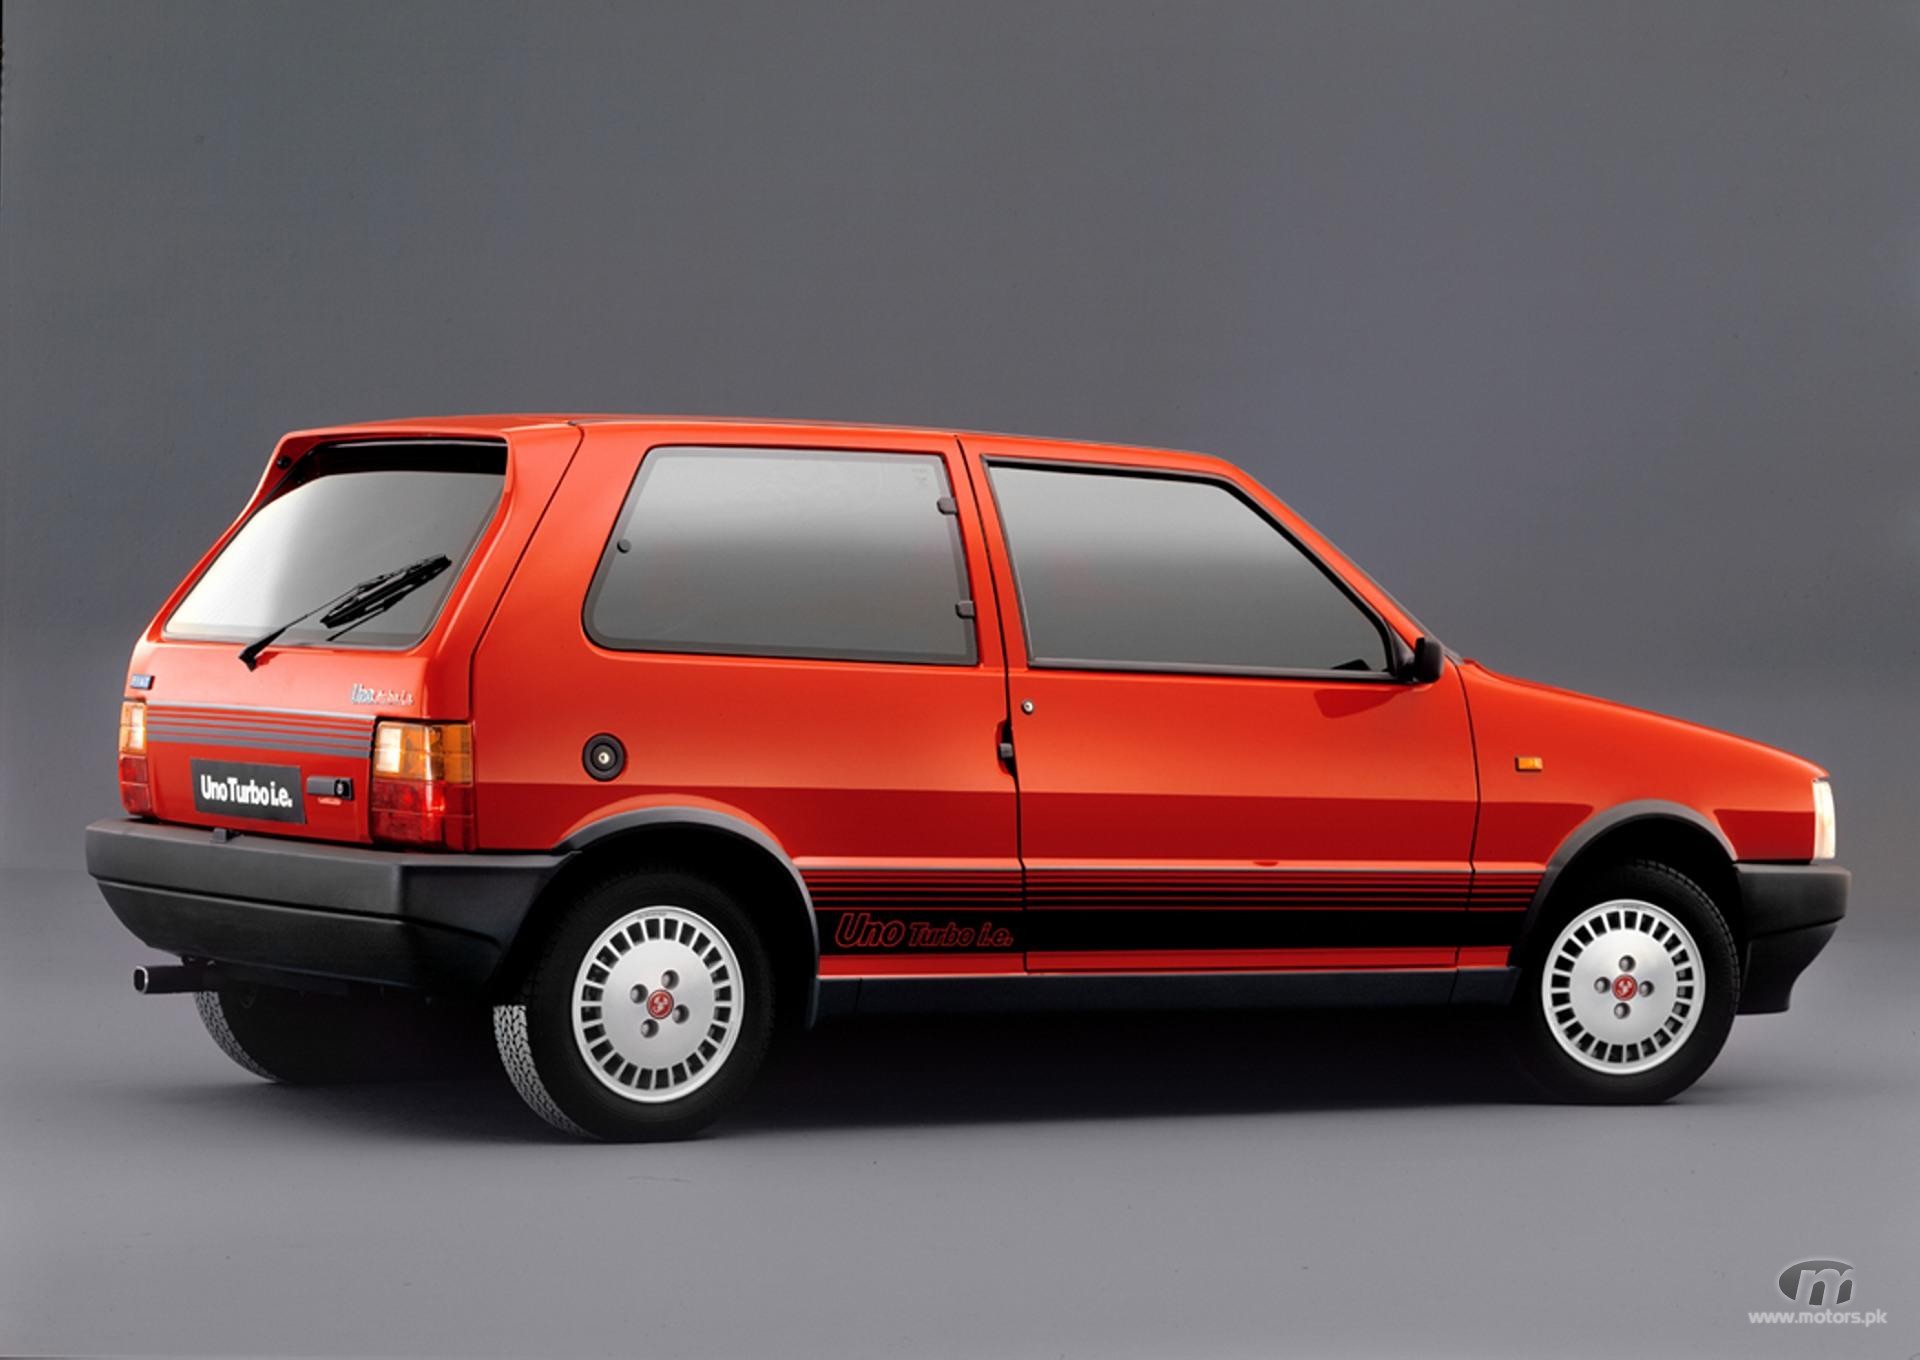 Fiat-Uno-Coupe-Image-0003